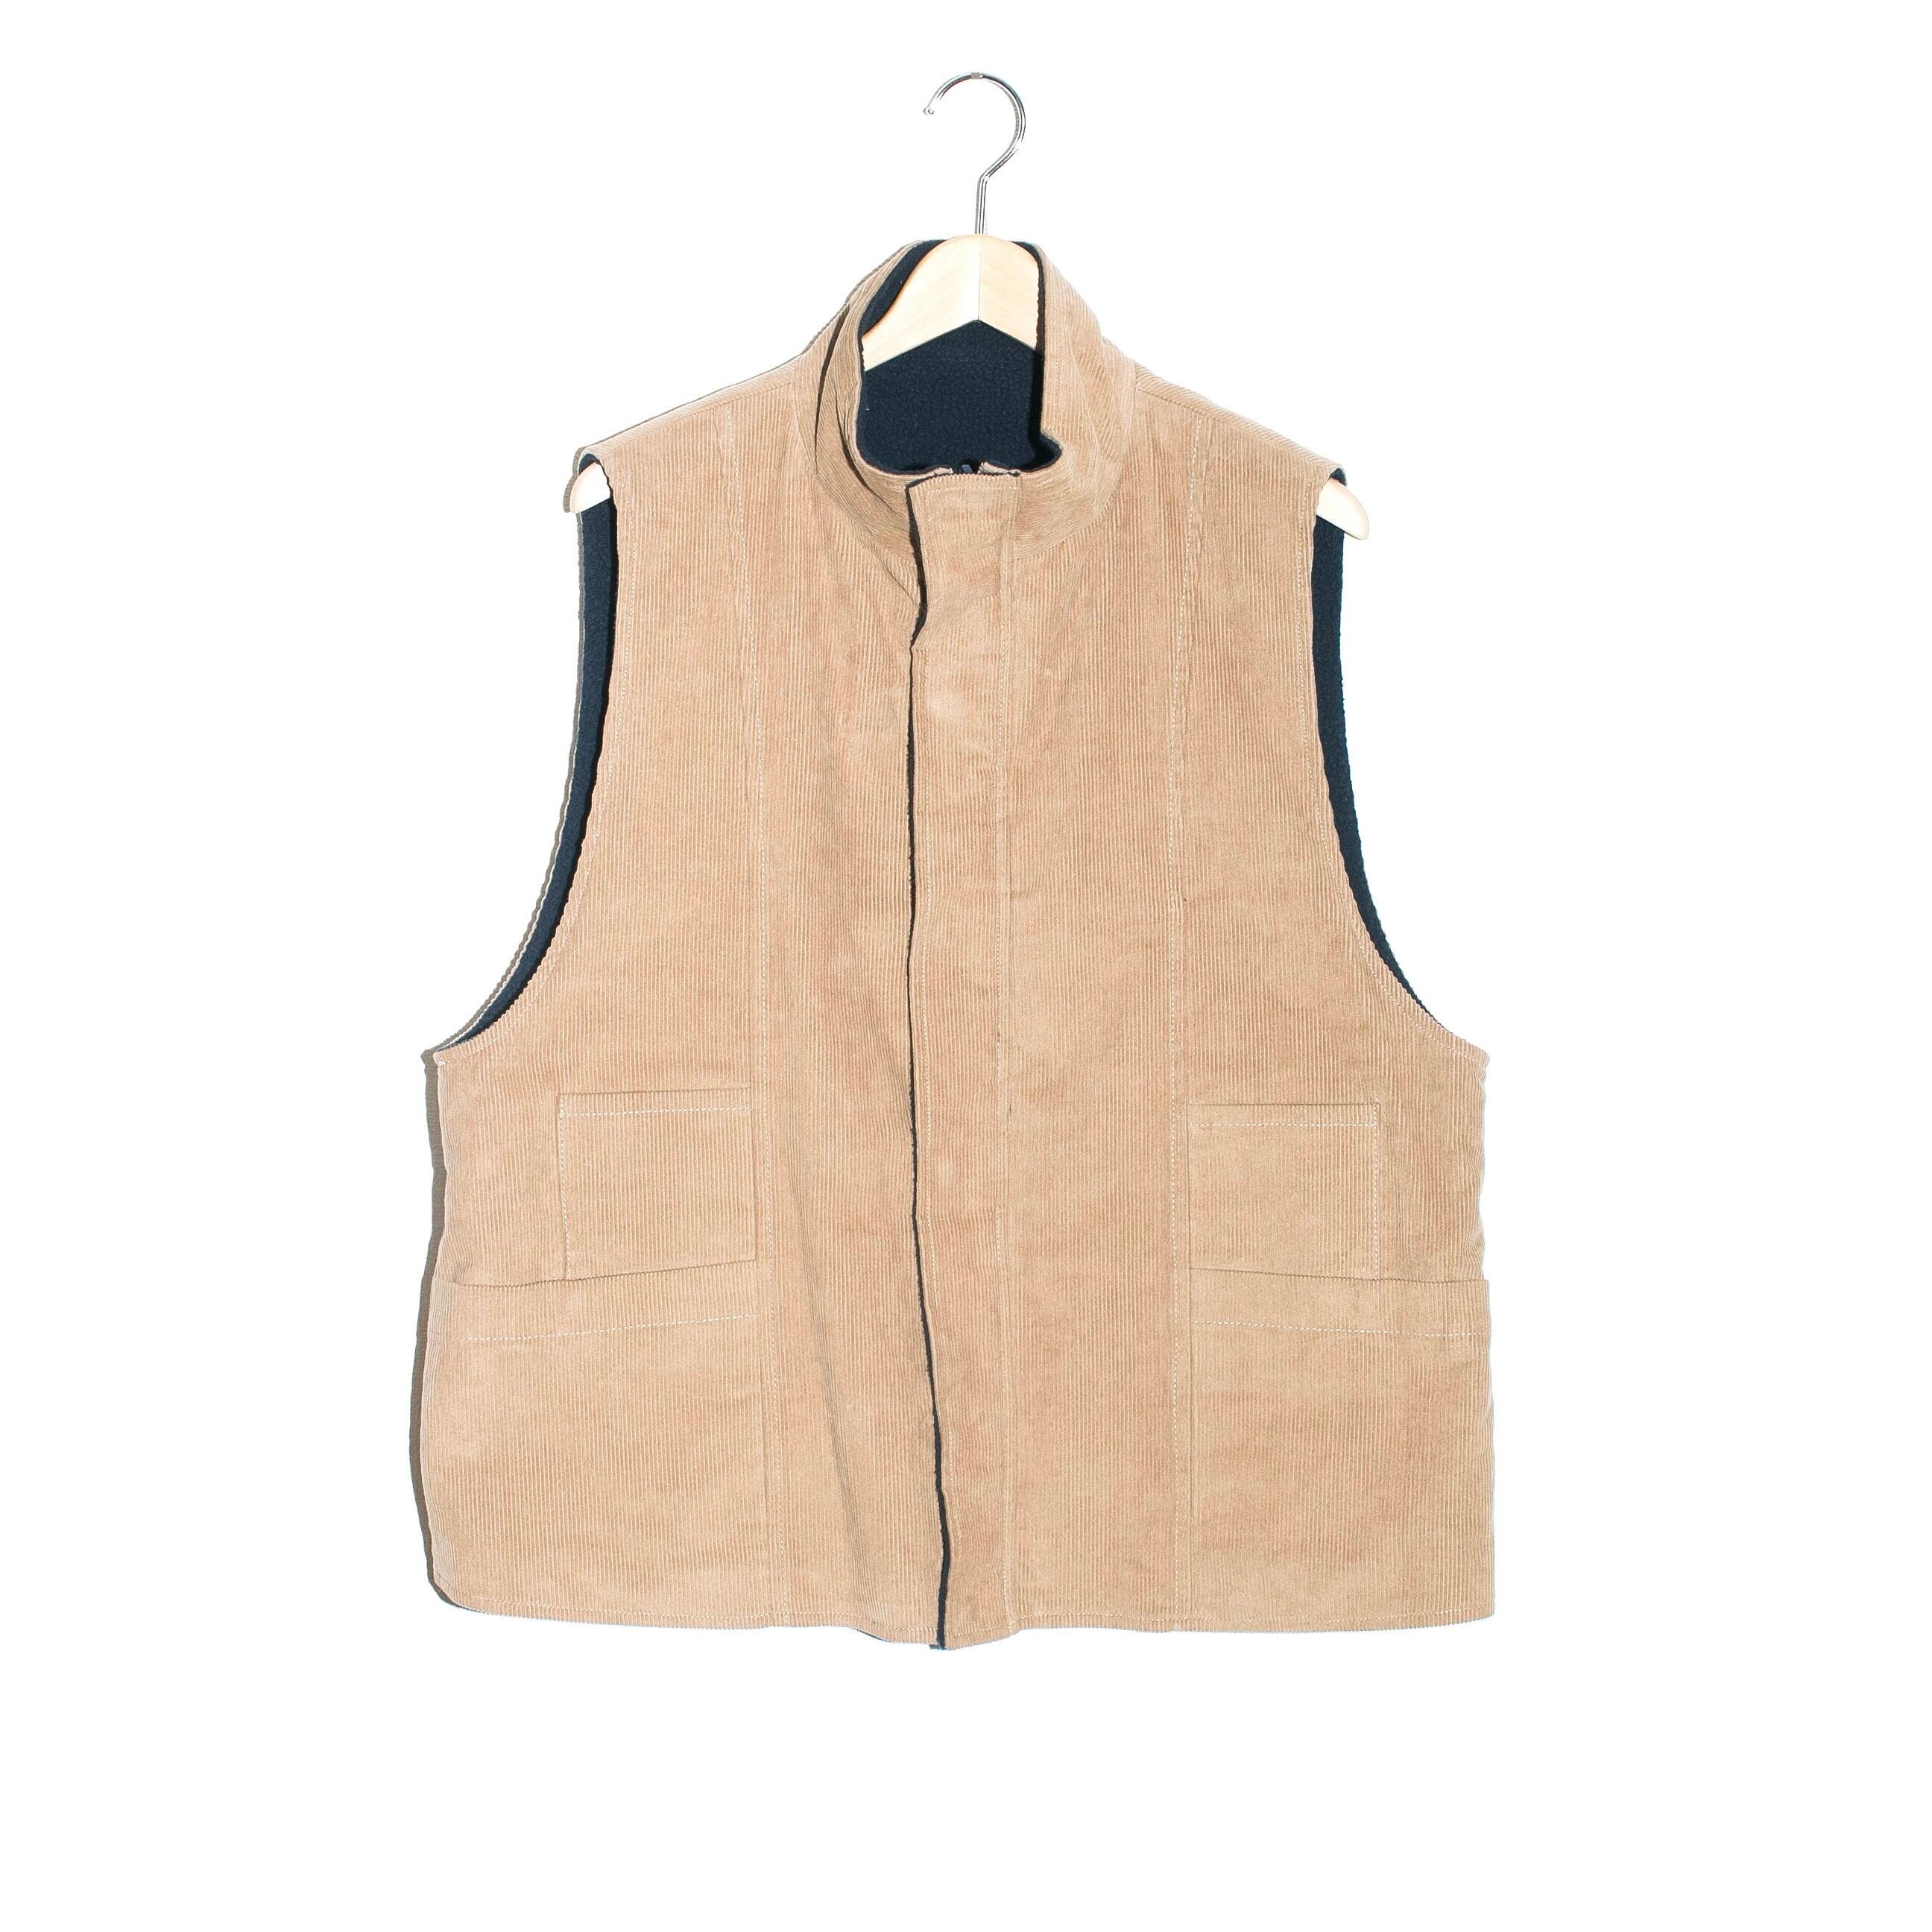 【wonderland】 Useful vest (BEIGE×NAVY) / ワンダーランド リバーシブルベスト